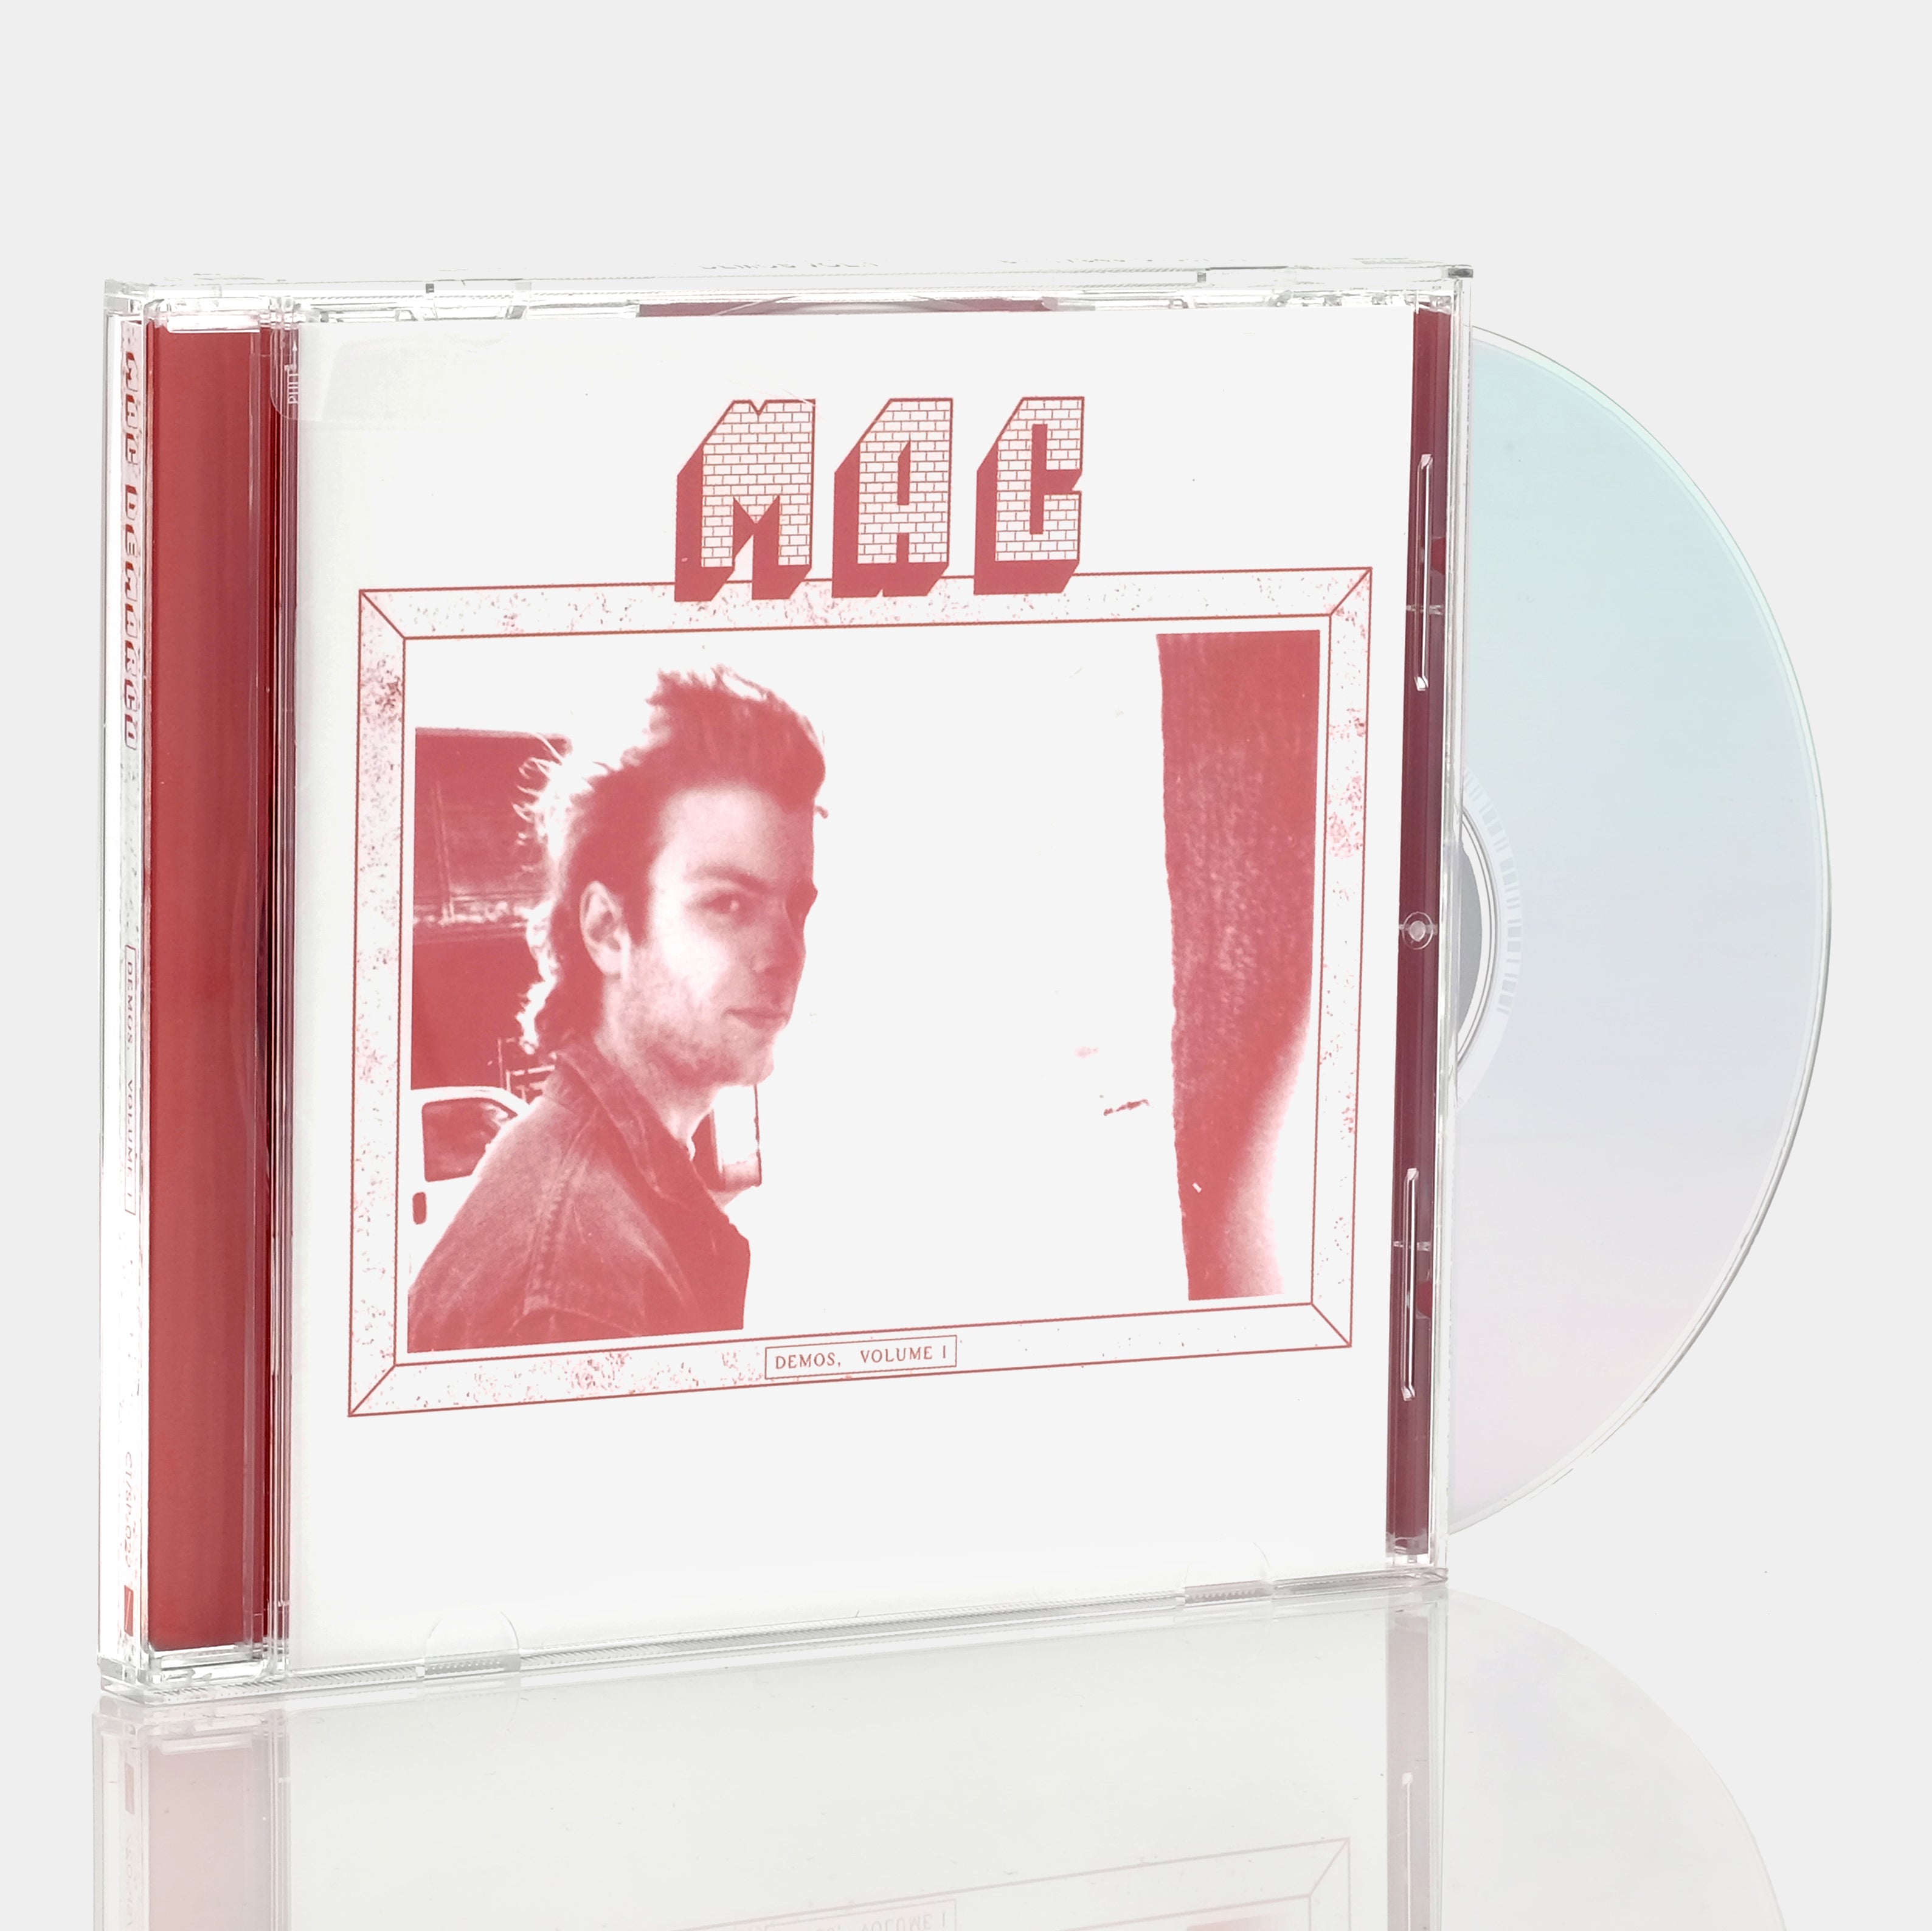 Mac Demarco - Demos, Volume 1 CD